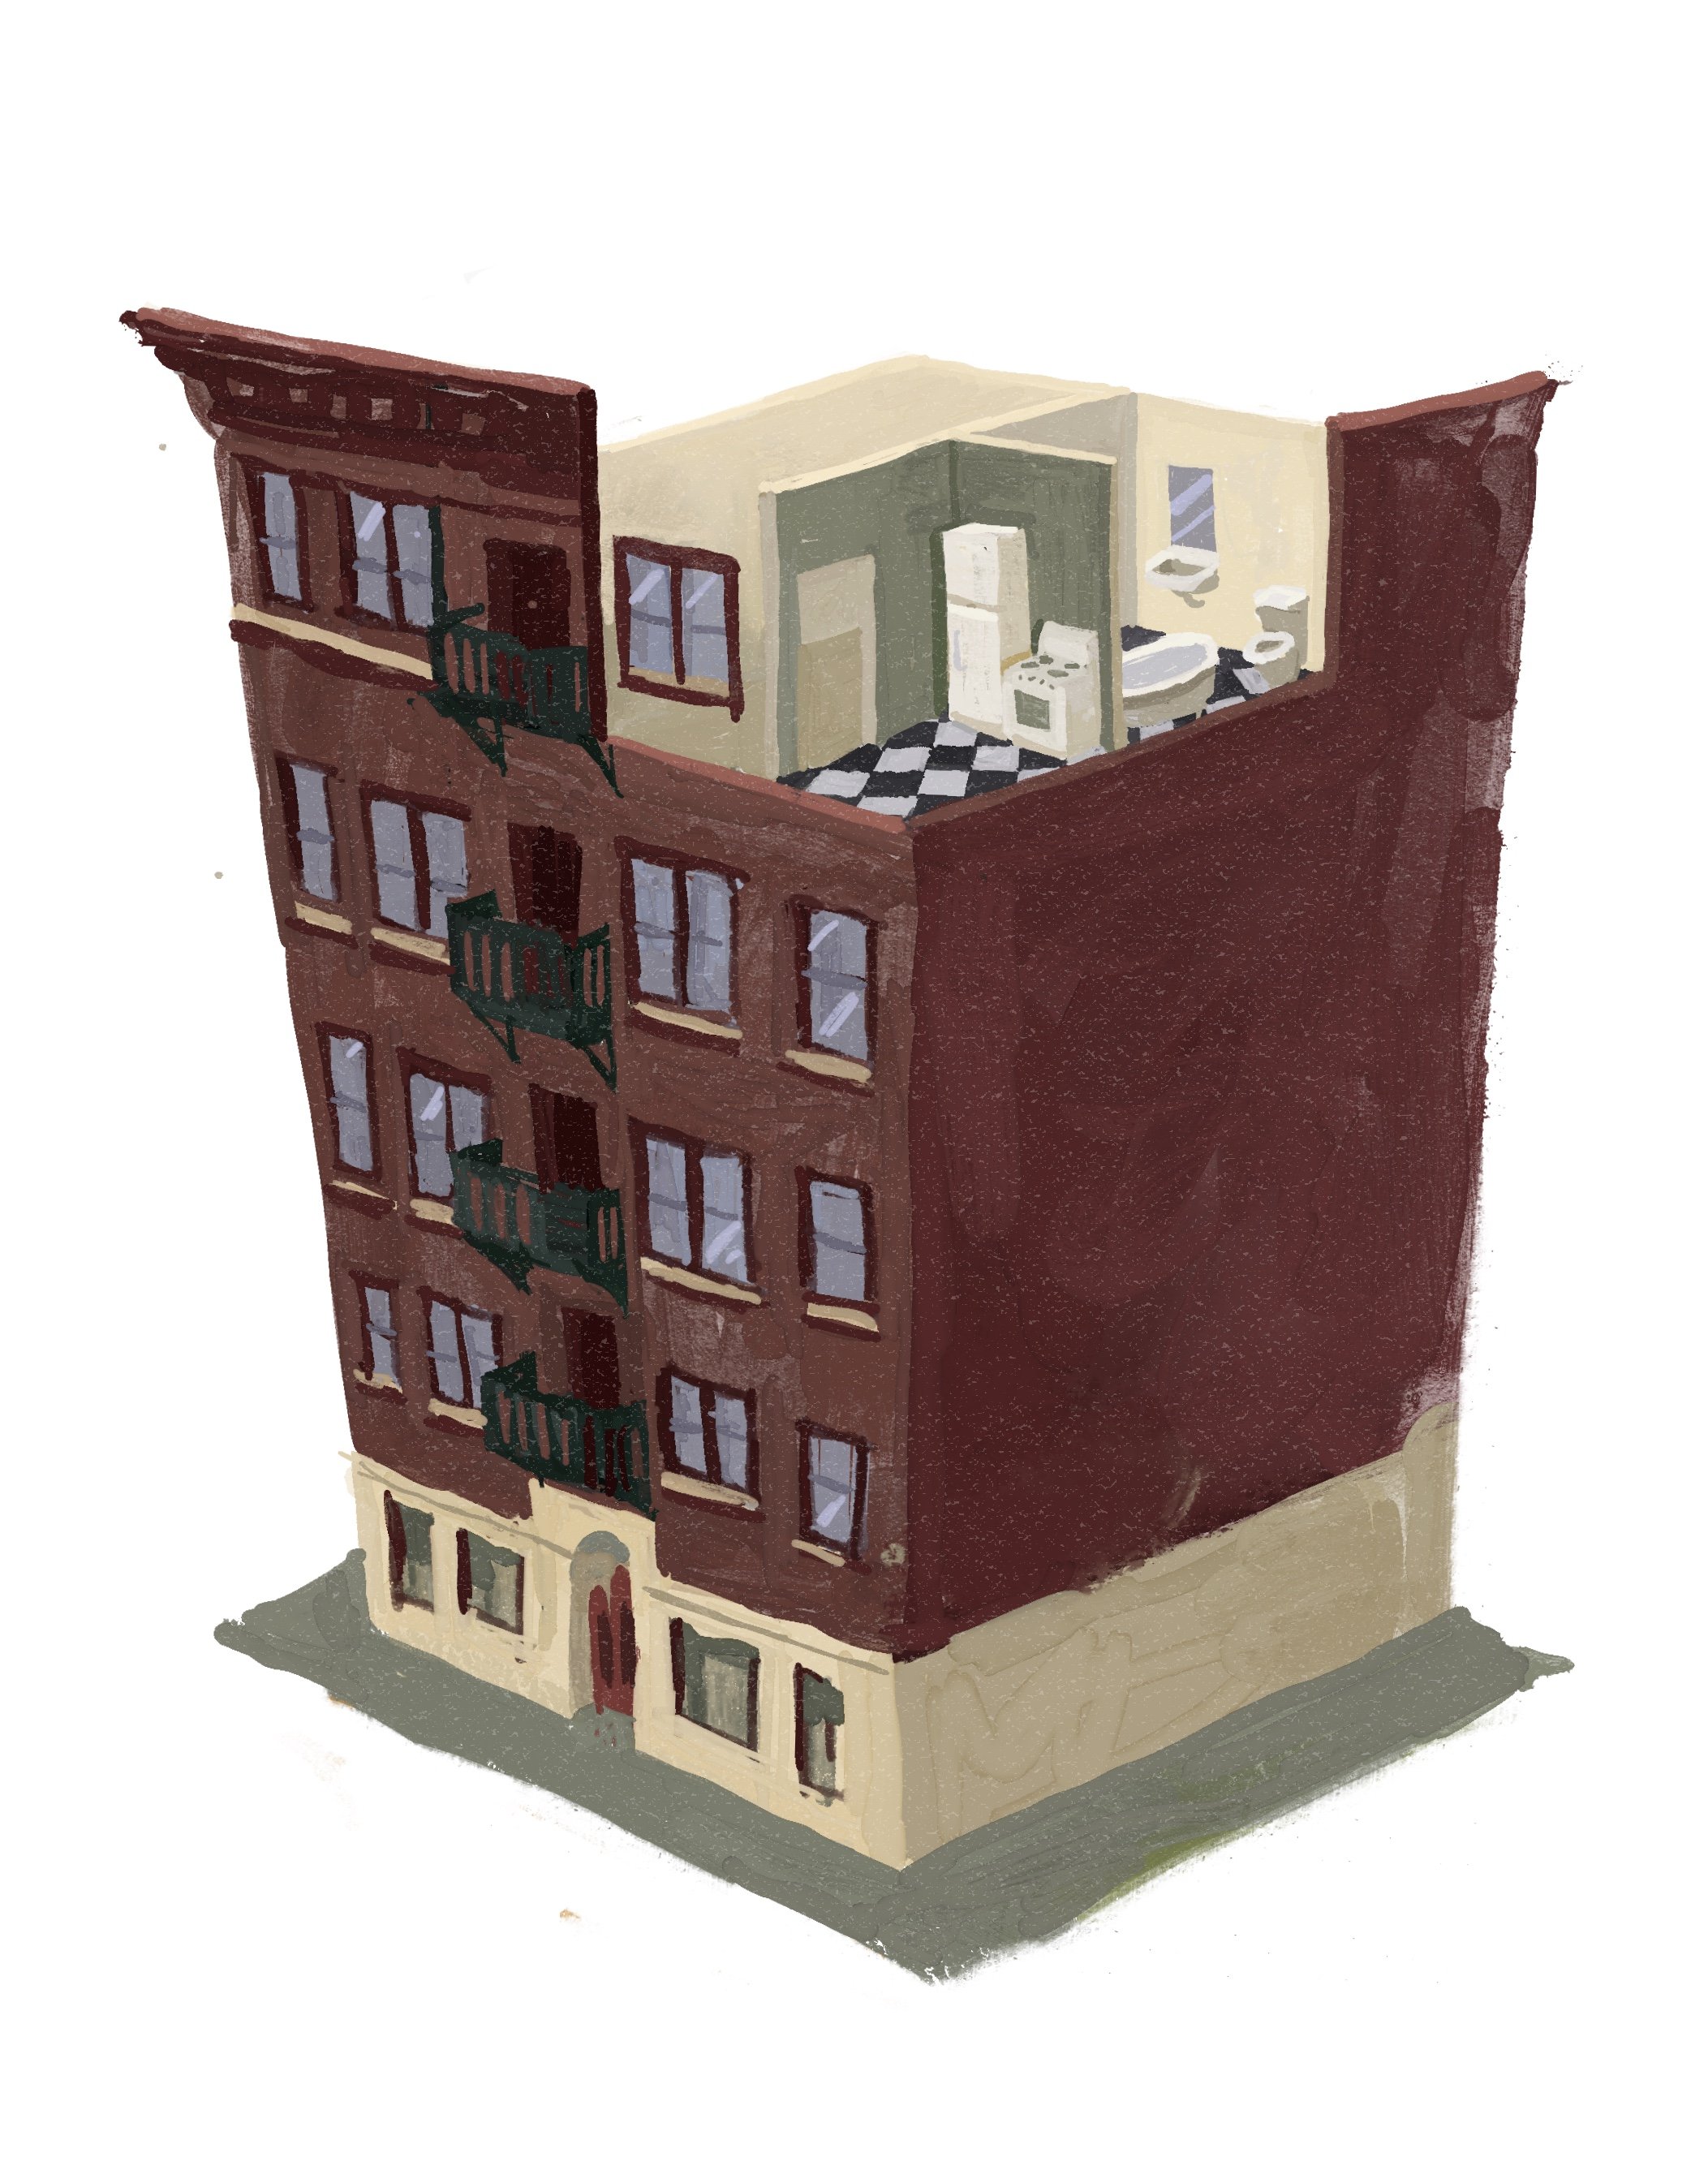  Illustration depicting affordable market-rate housing for the Portland Stack  